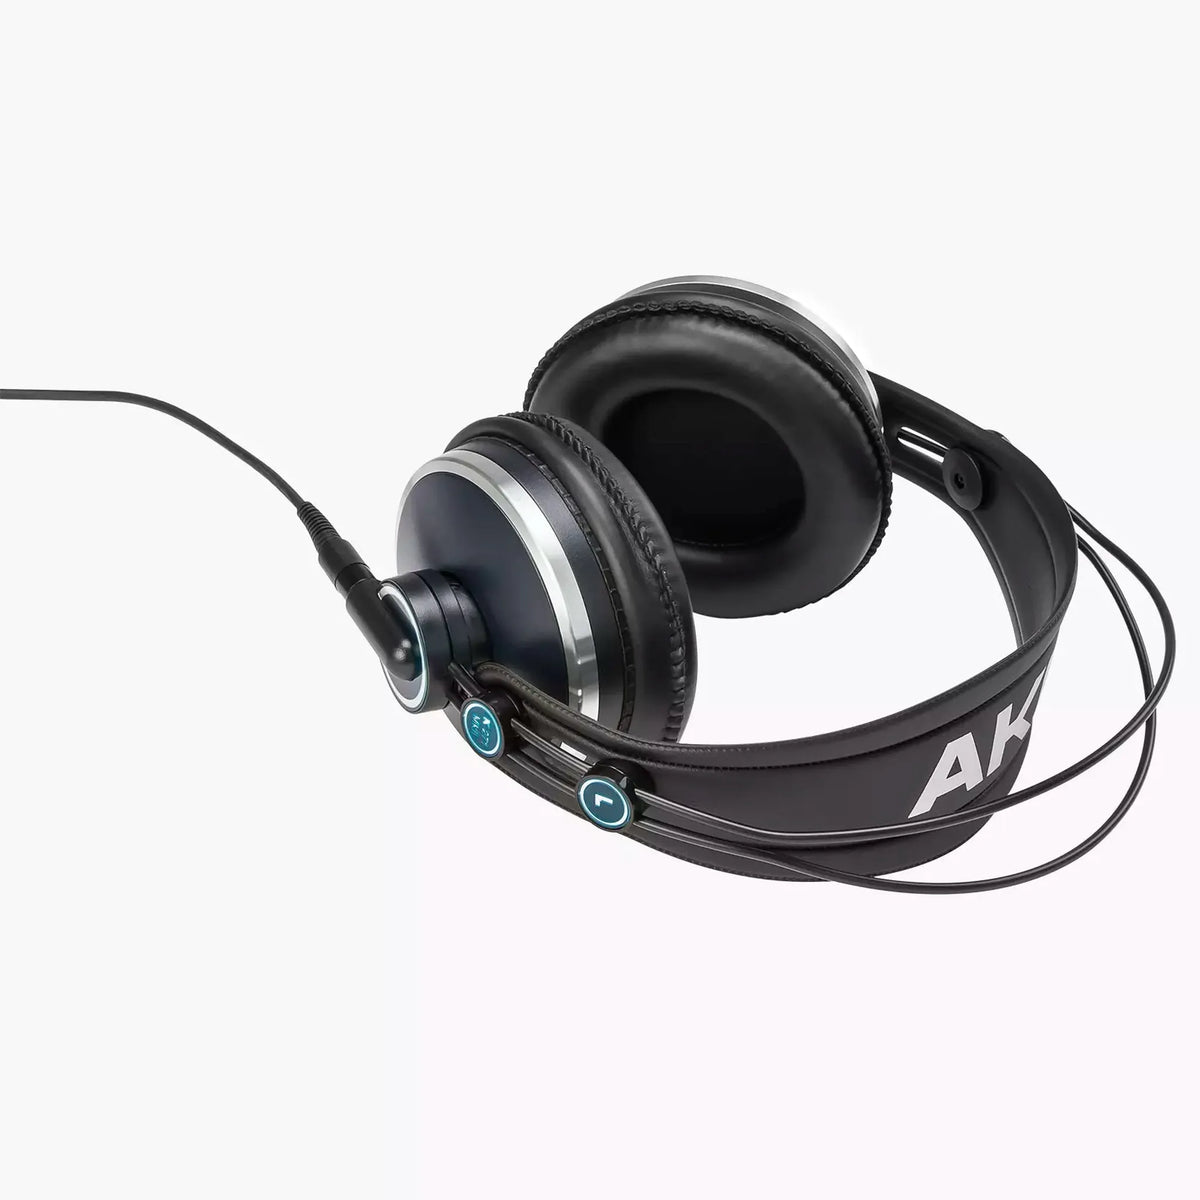 AKG K271 MKII Studio Headphones